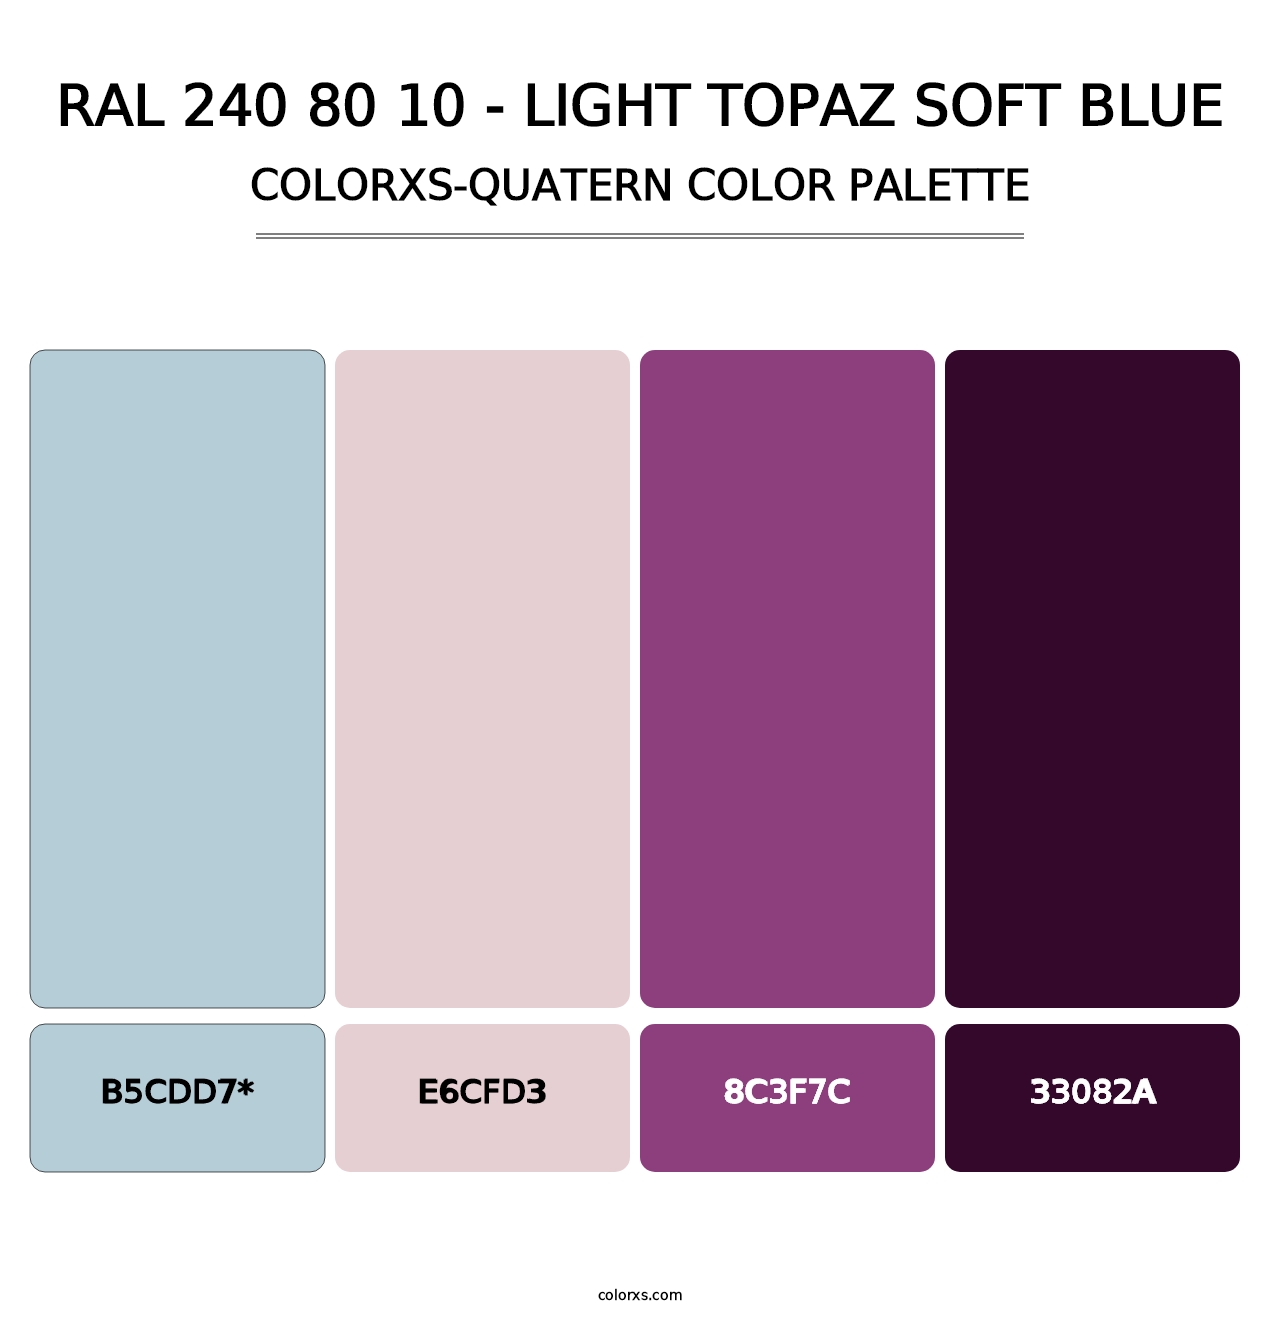 RAL 240 80 10 - Light Topaz Soft Blue - Colorxs Quatern Palette